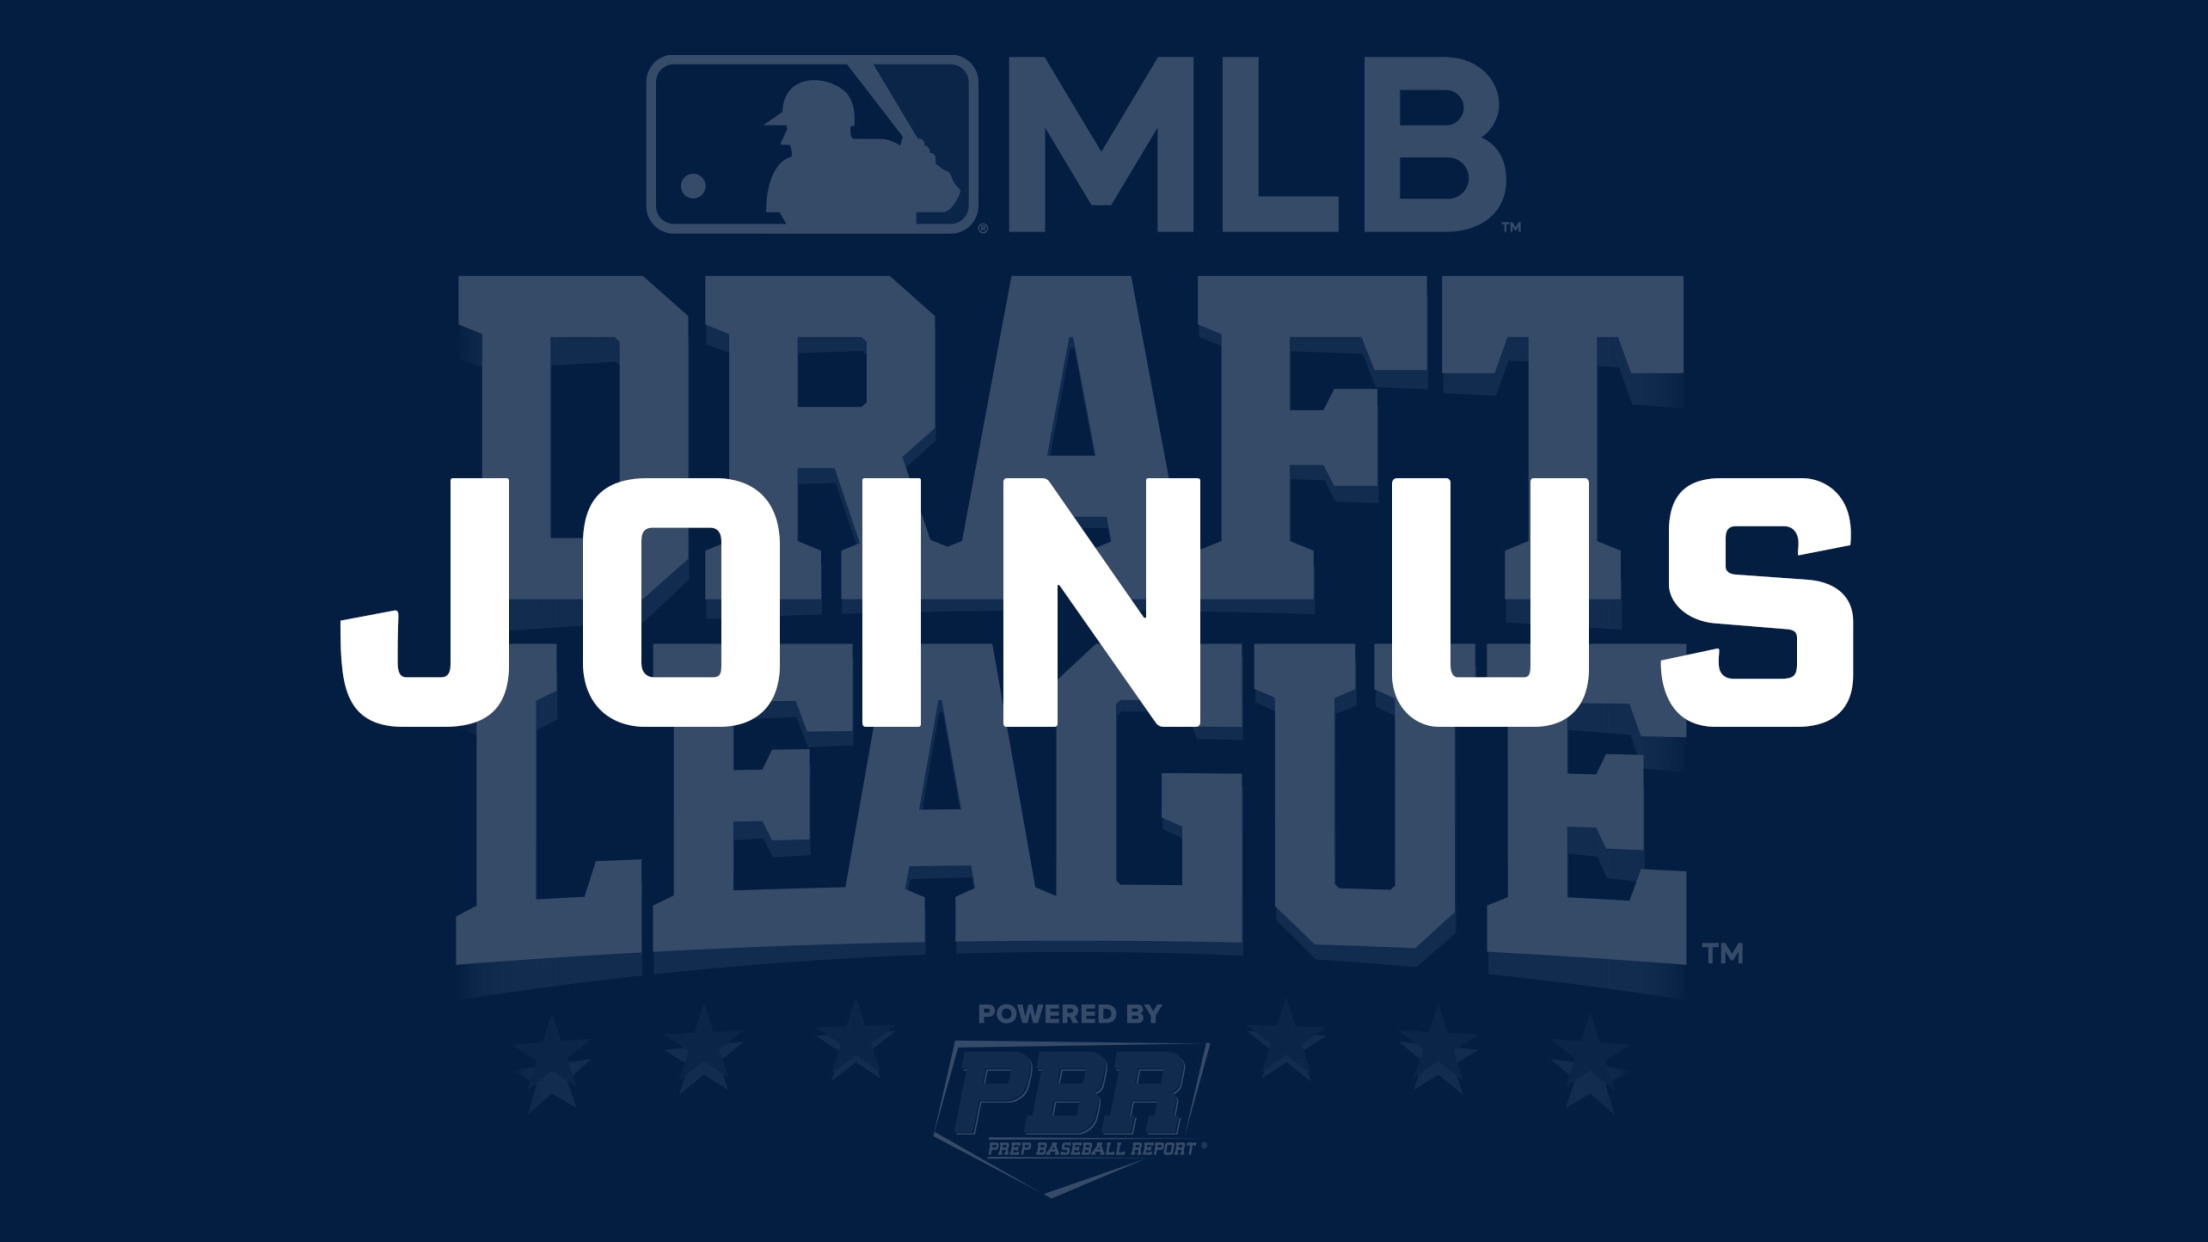 MLB Draft League